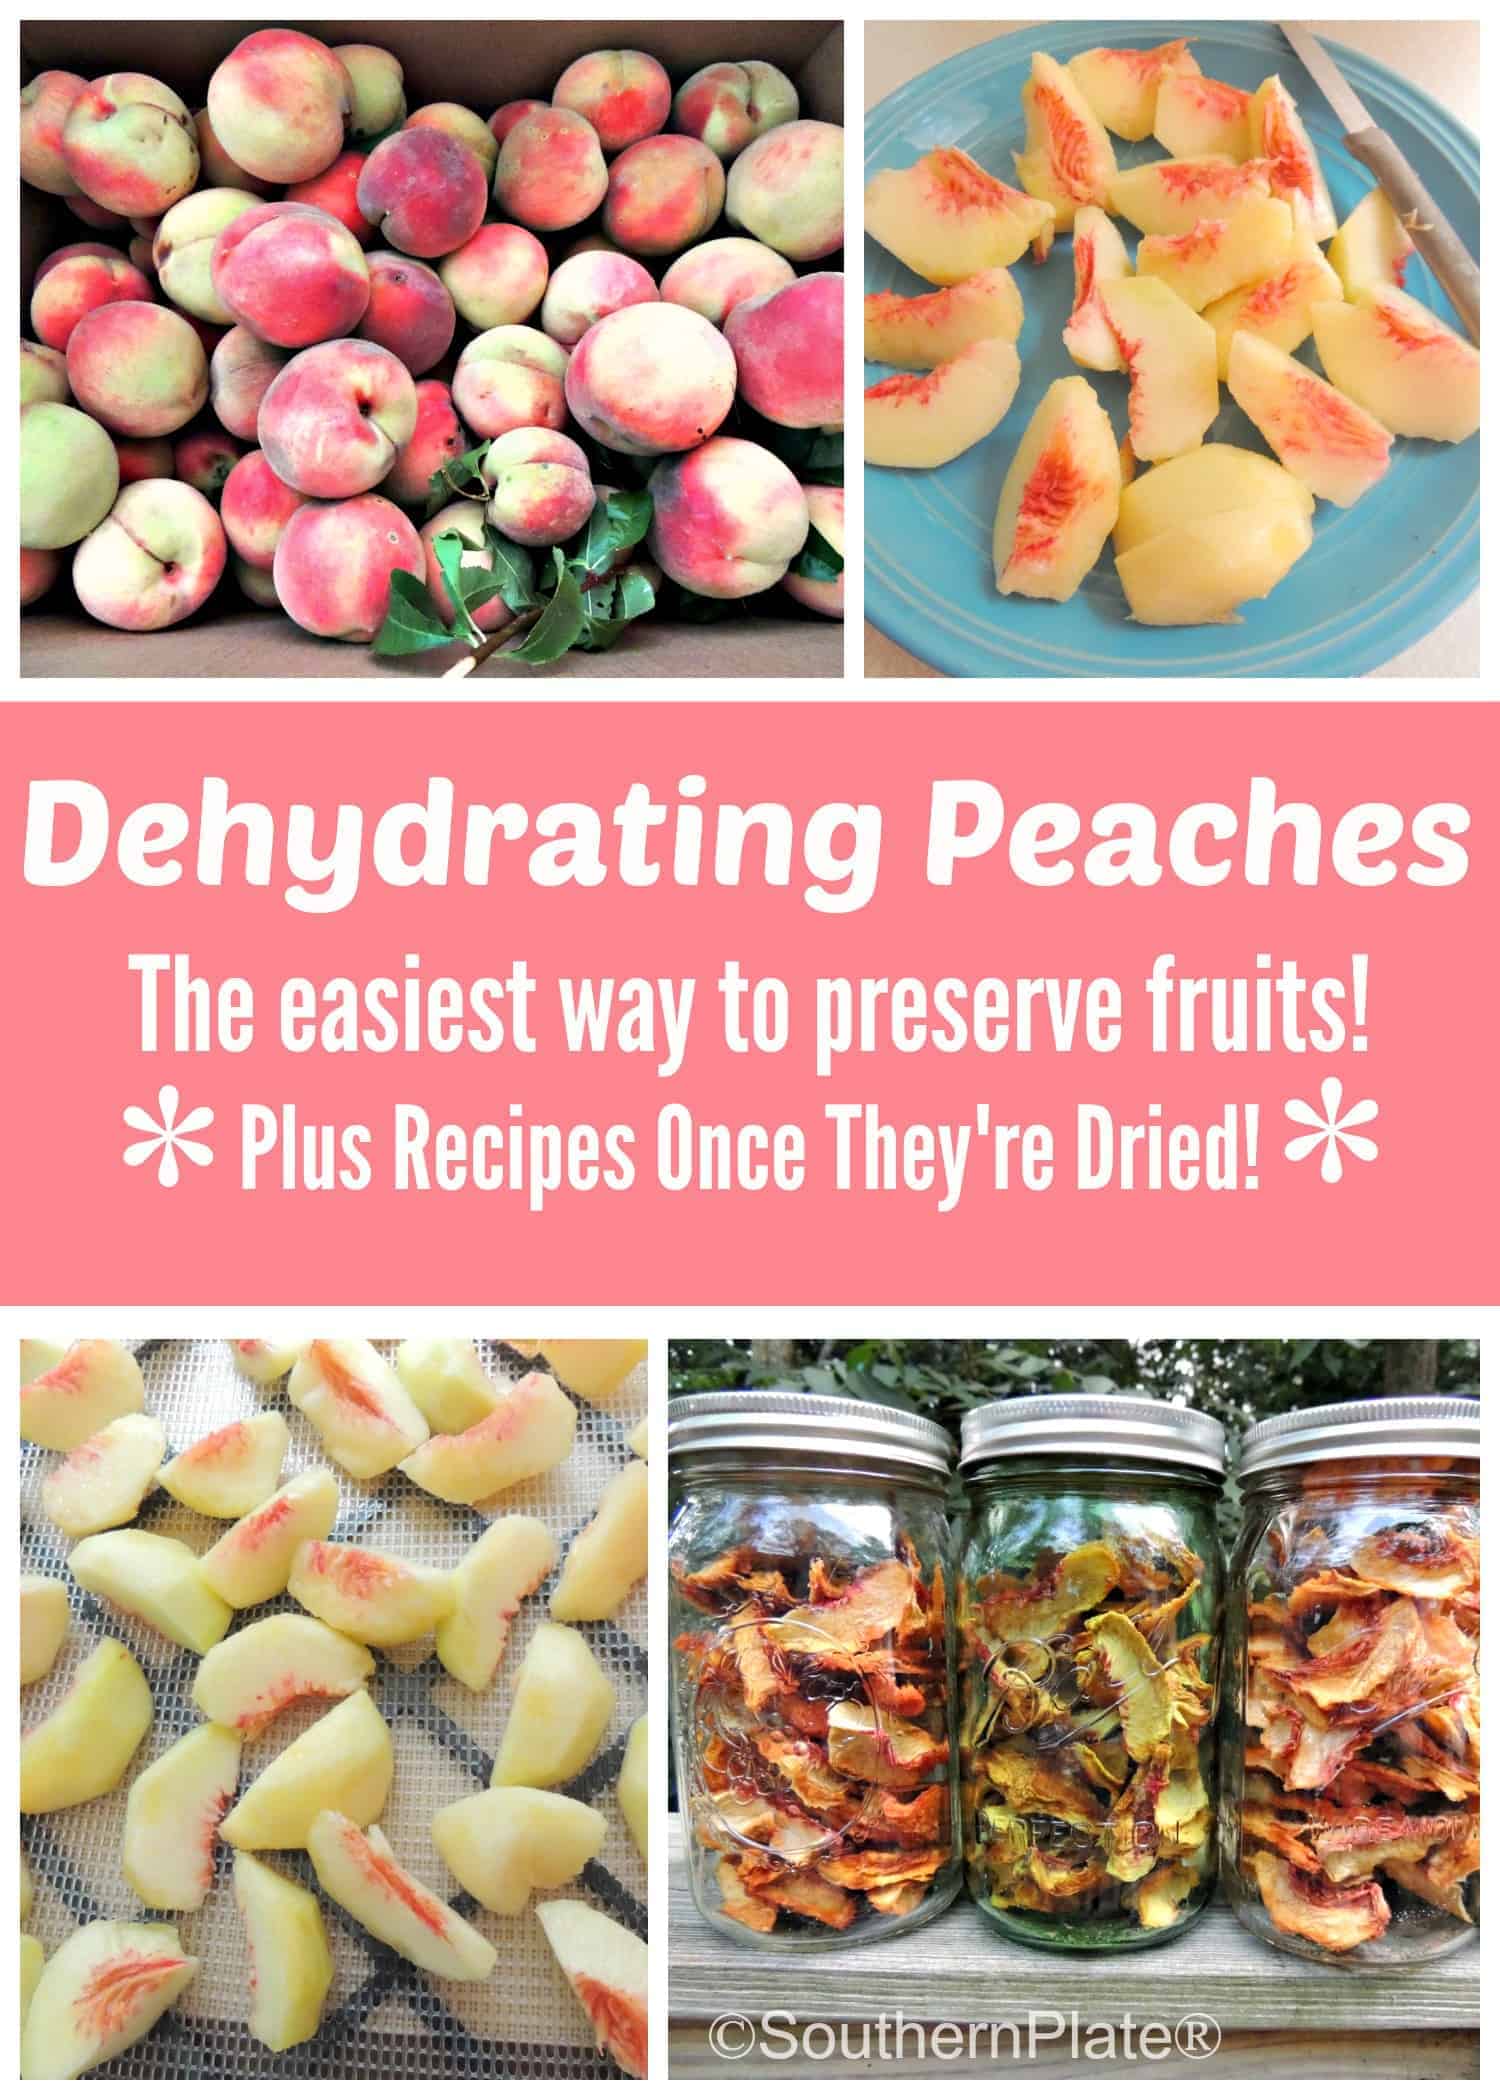 Dehydrating Peaches